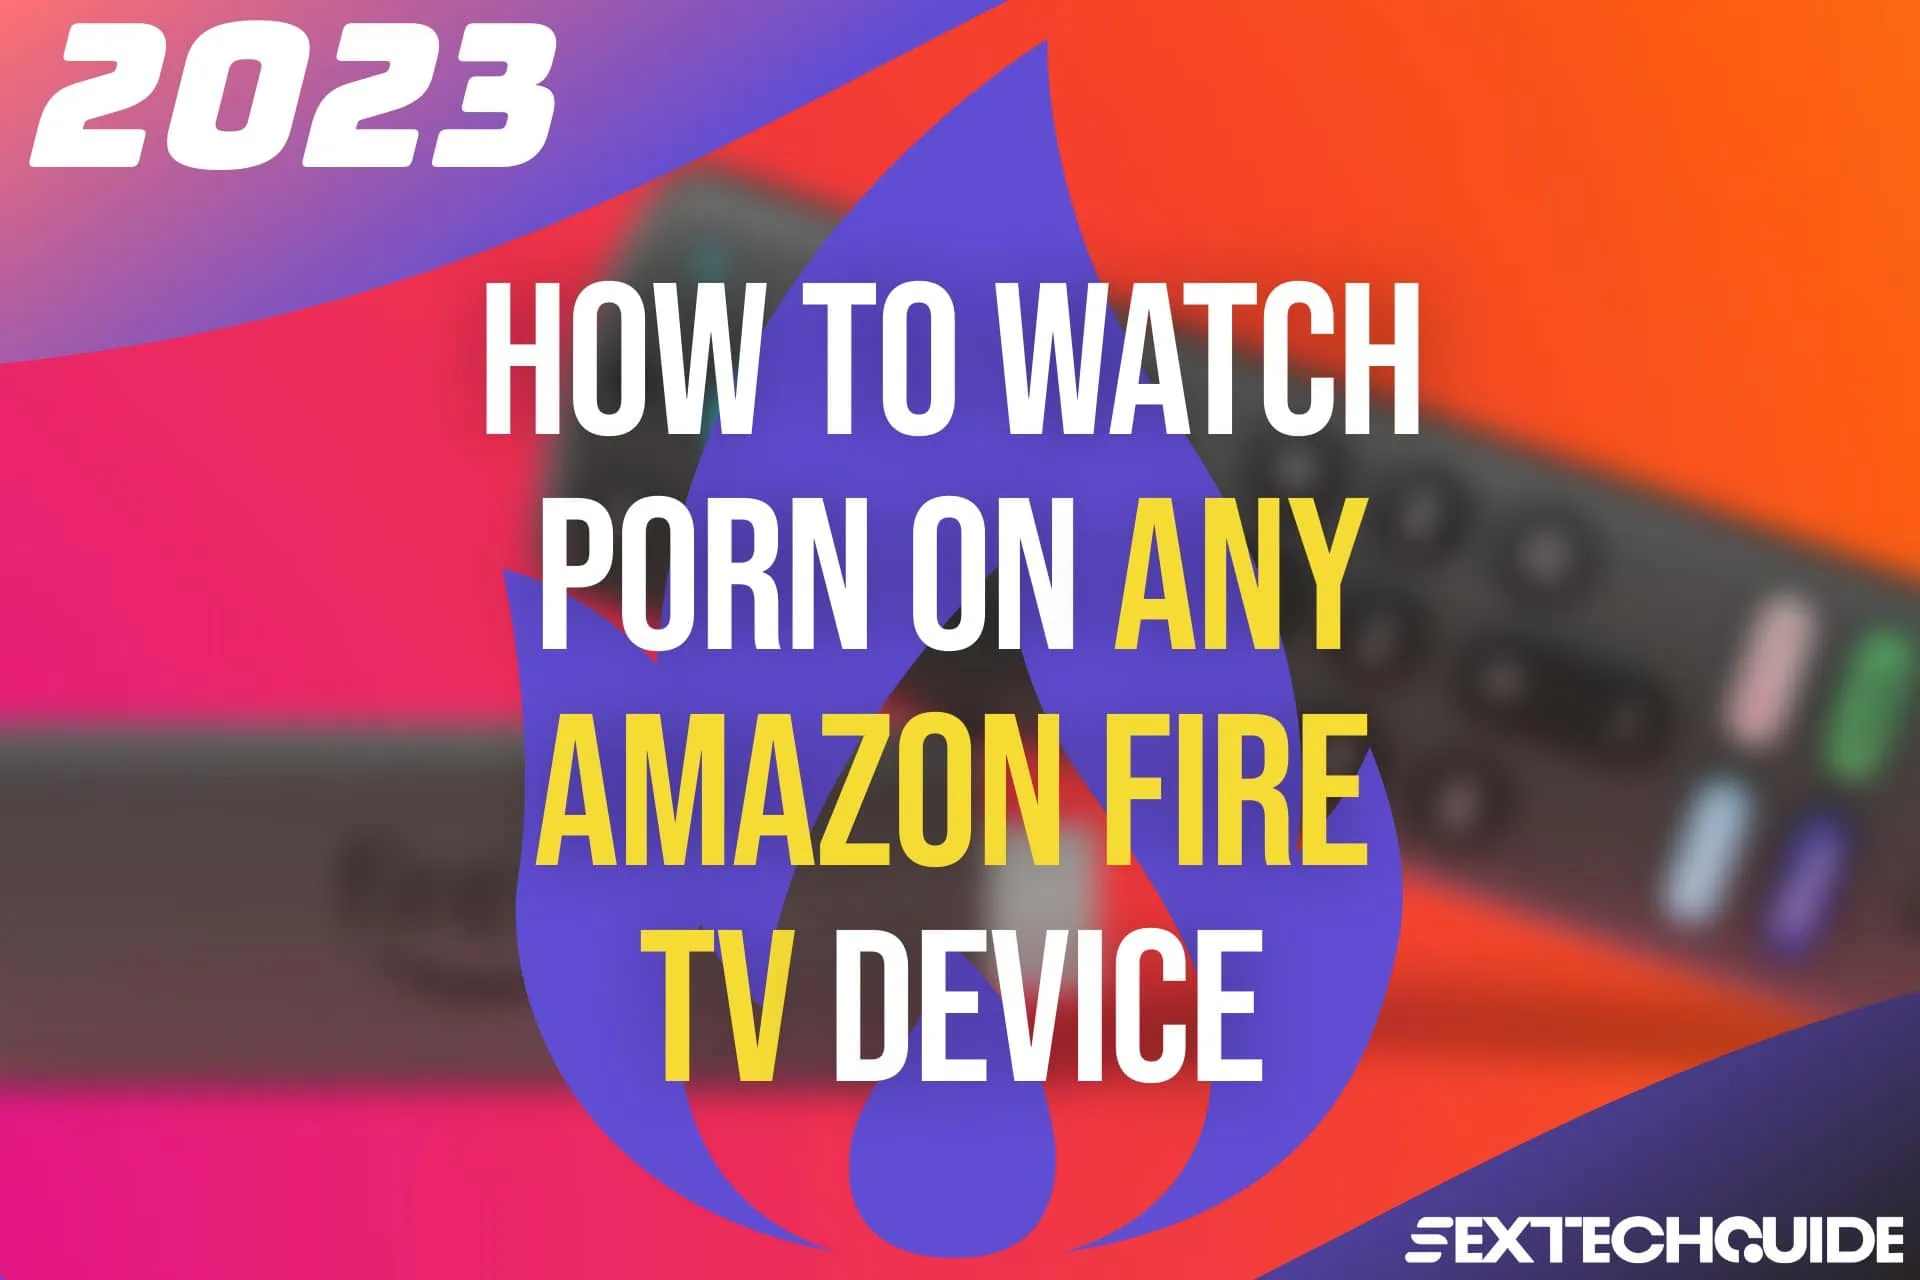 Technology Video Xxx - Fire Porn (2023): Find & Watch XXX Videos on Amazon Devices